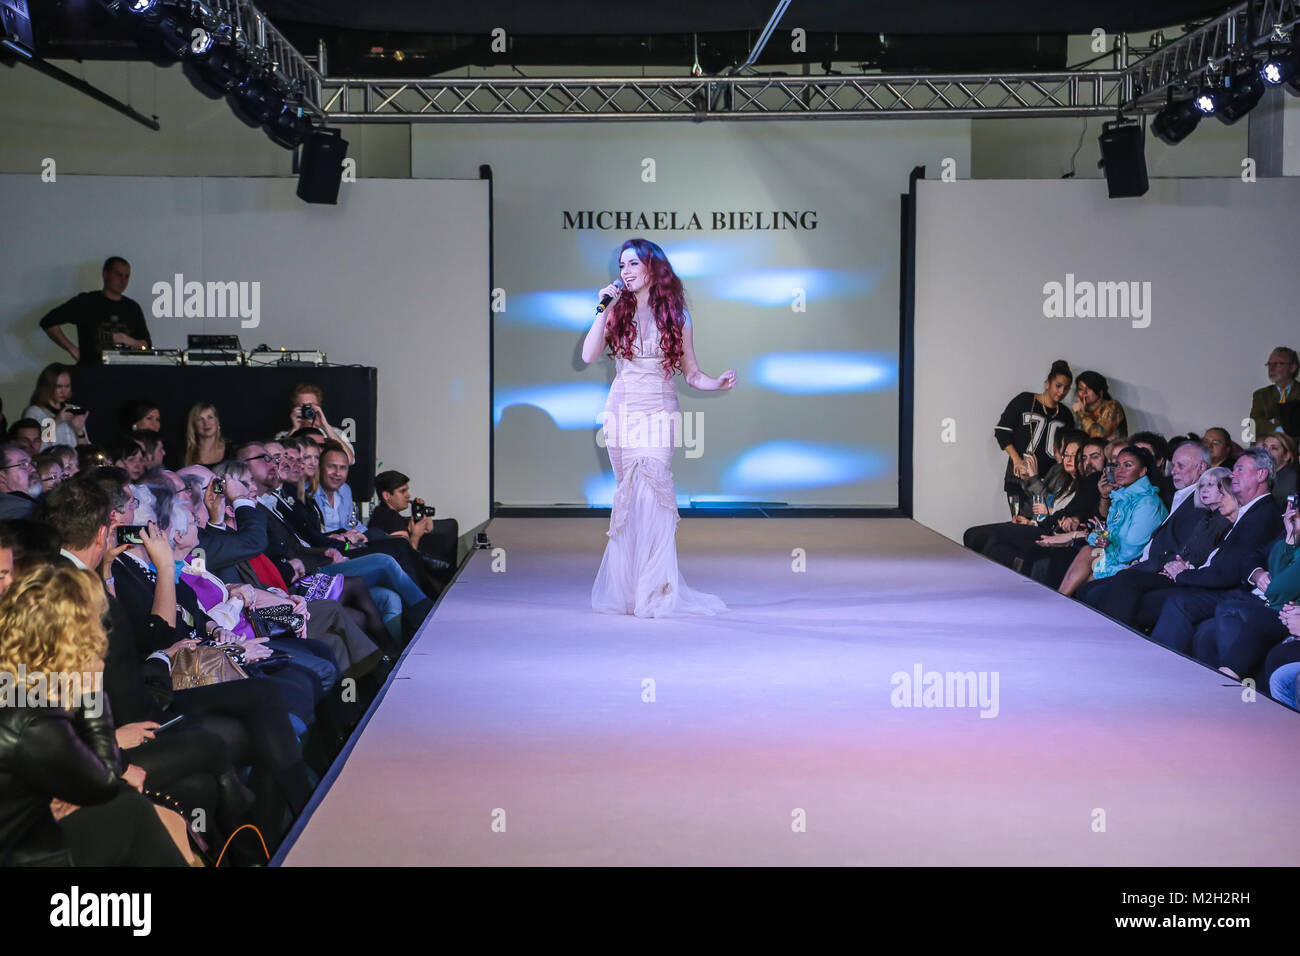 Kerstin Merlin, Fashionweek 2014 - Runwayshow von Michaela Bieling.Credit Tamara Bieber Stock Photo